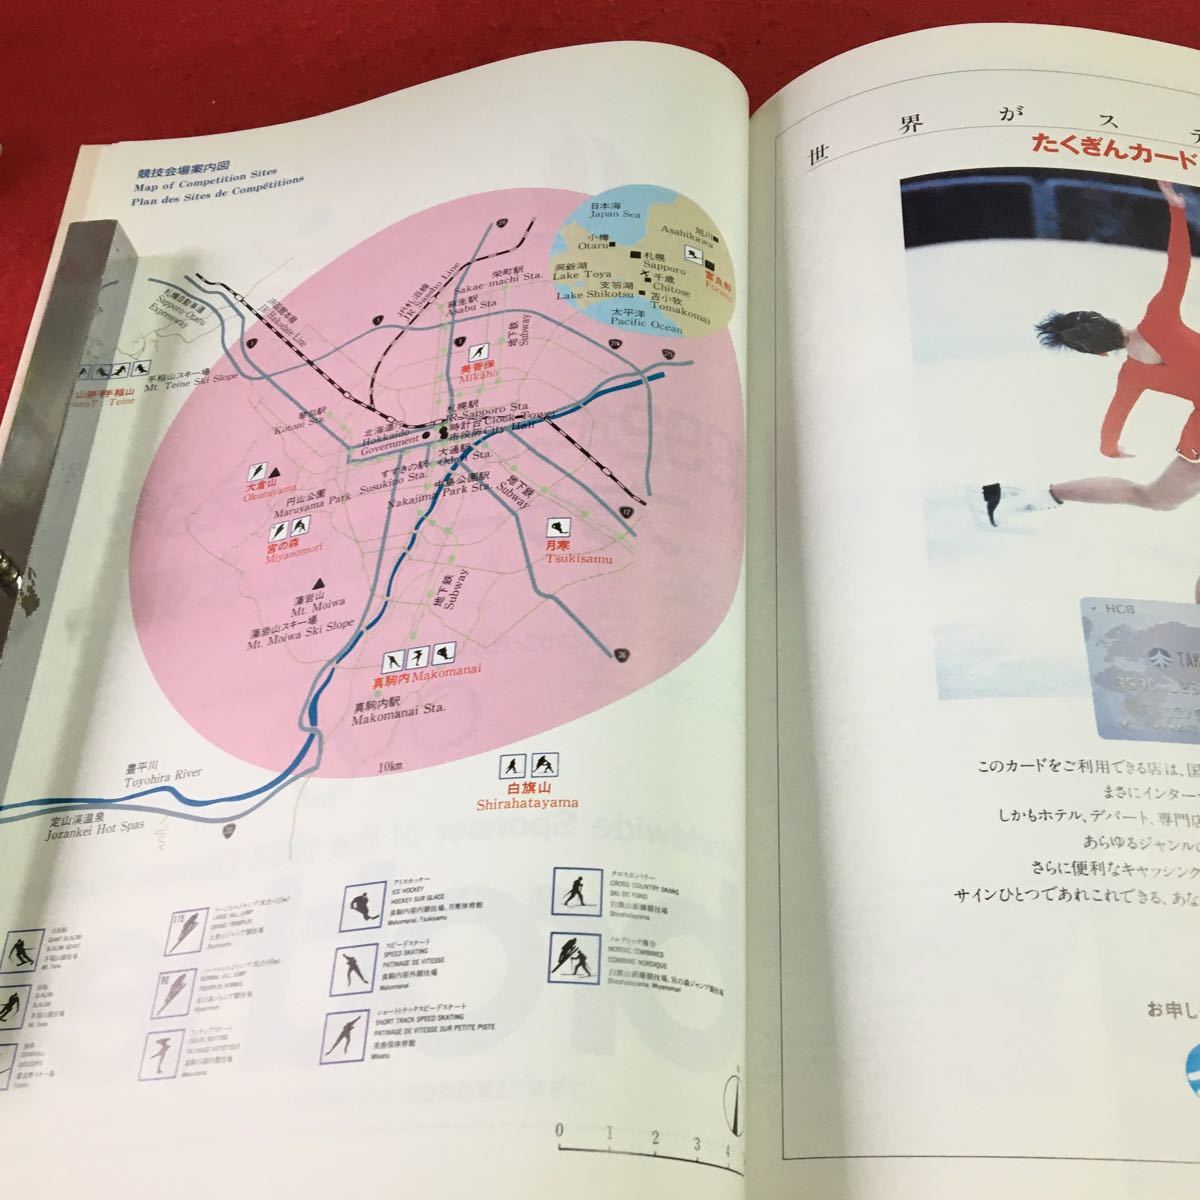 S7h-085 ユニバーシアード冬季競技大会 1991 札幌 公式ガイドブック オフィシャルブック 発行年月日記載なし_画像7